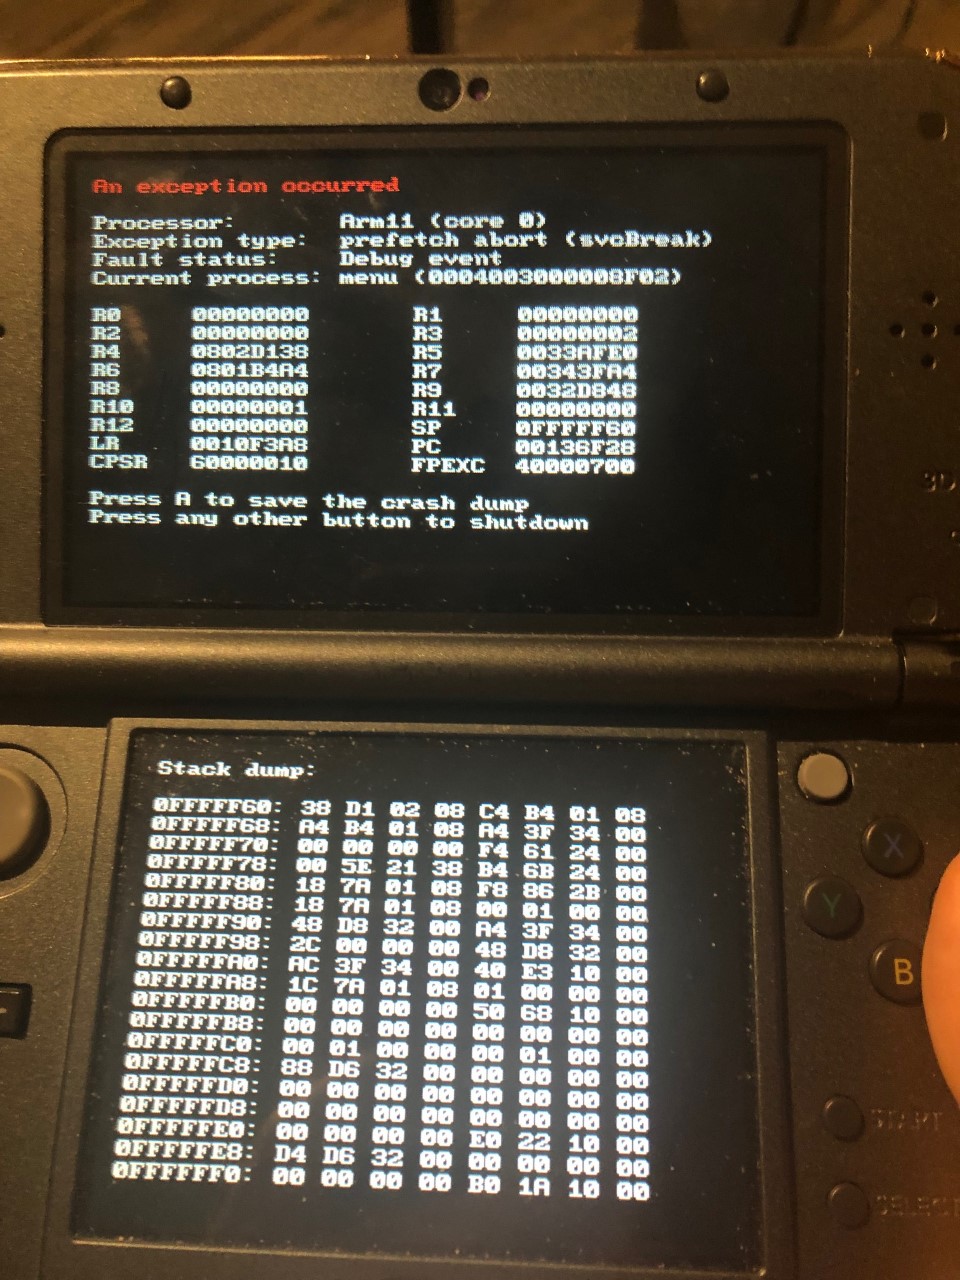 New Nintendo 3DS XL Arm11 Core 0 prefetch abort svcBreak | GBAtemp.net -  The Independent Video Game Community